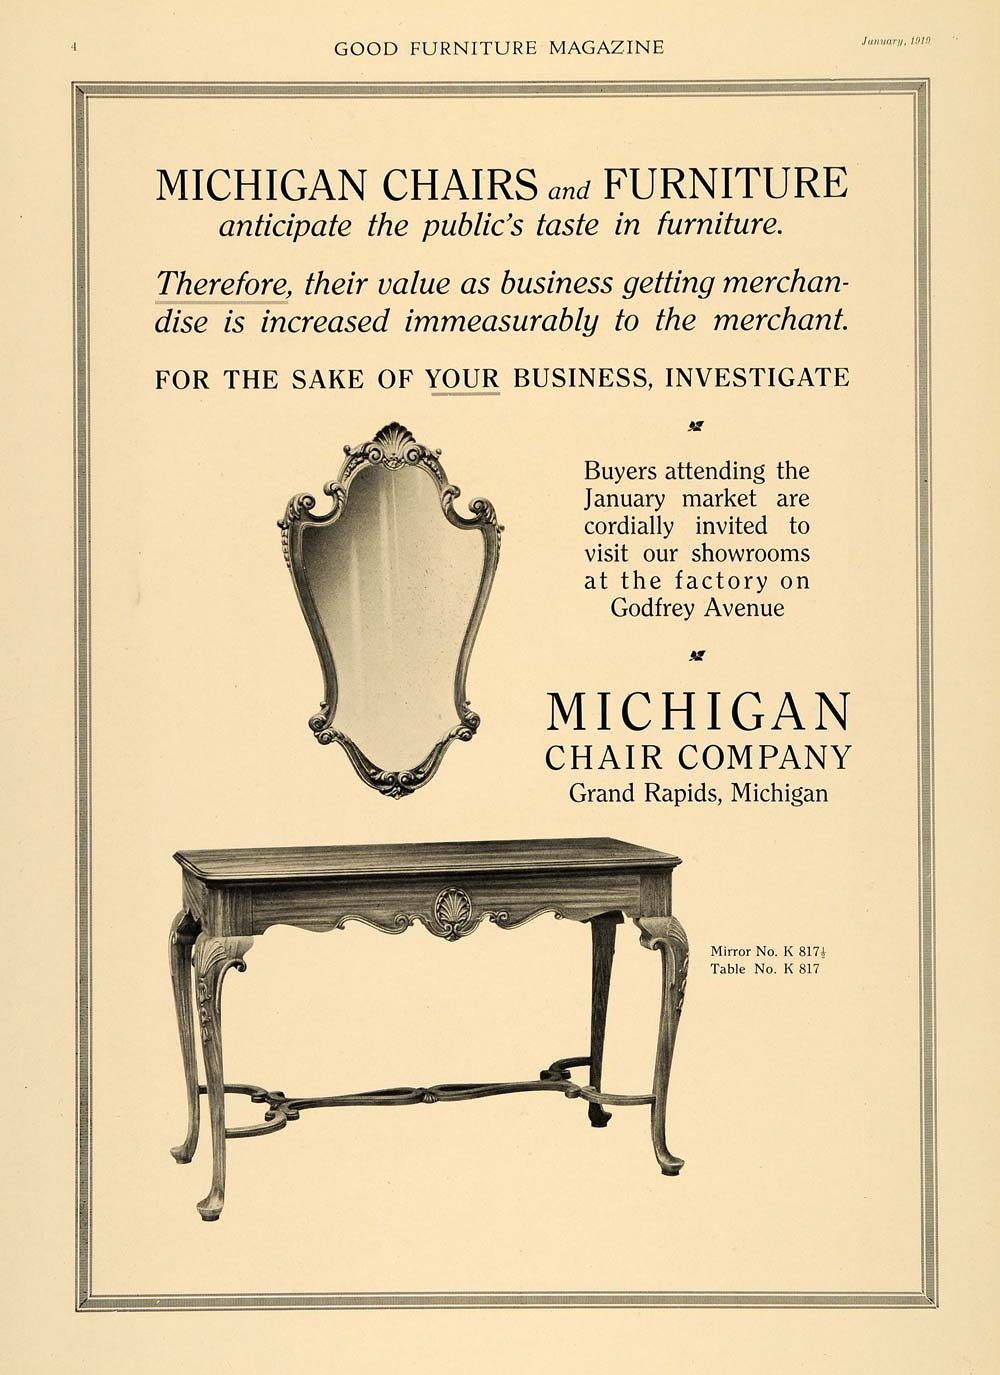 1919 Ad Michigan Chair Company No K817 Table Mirror Original